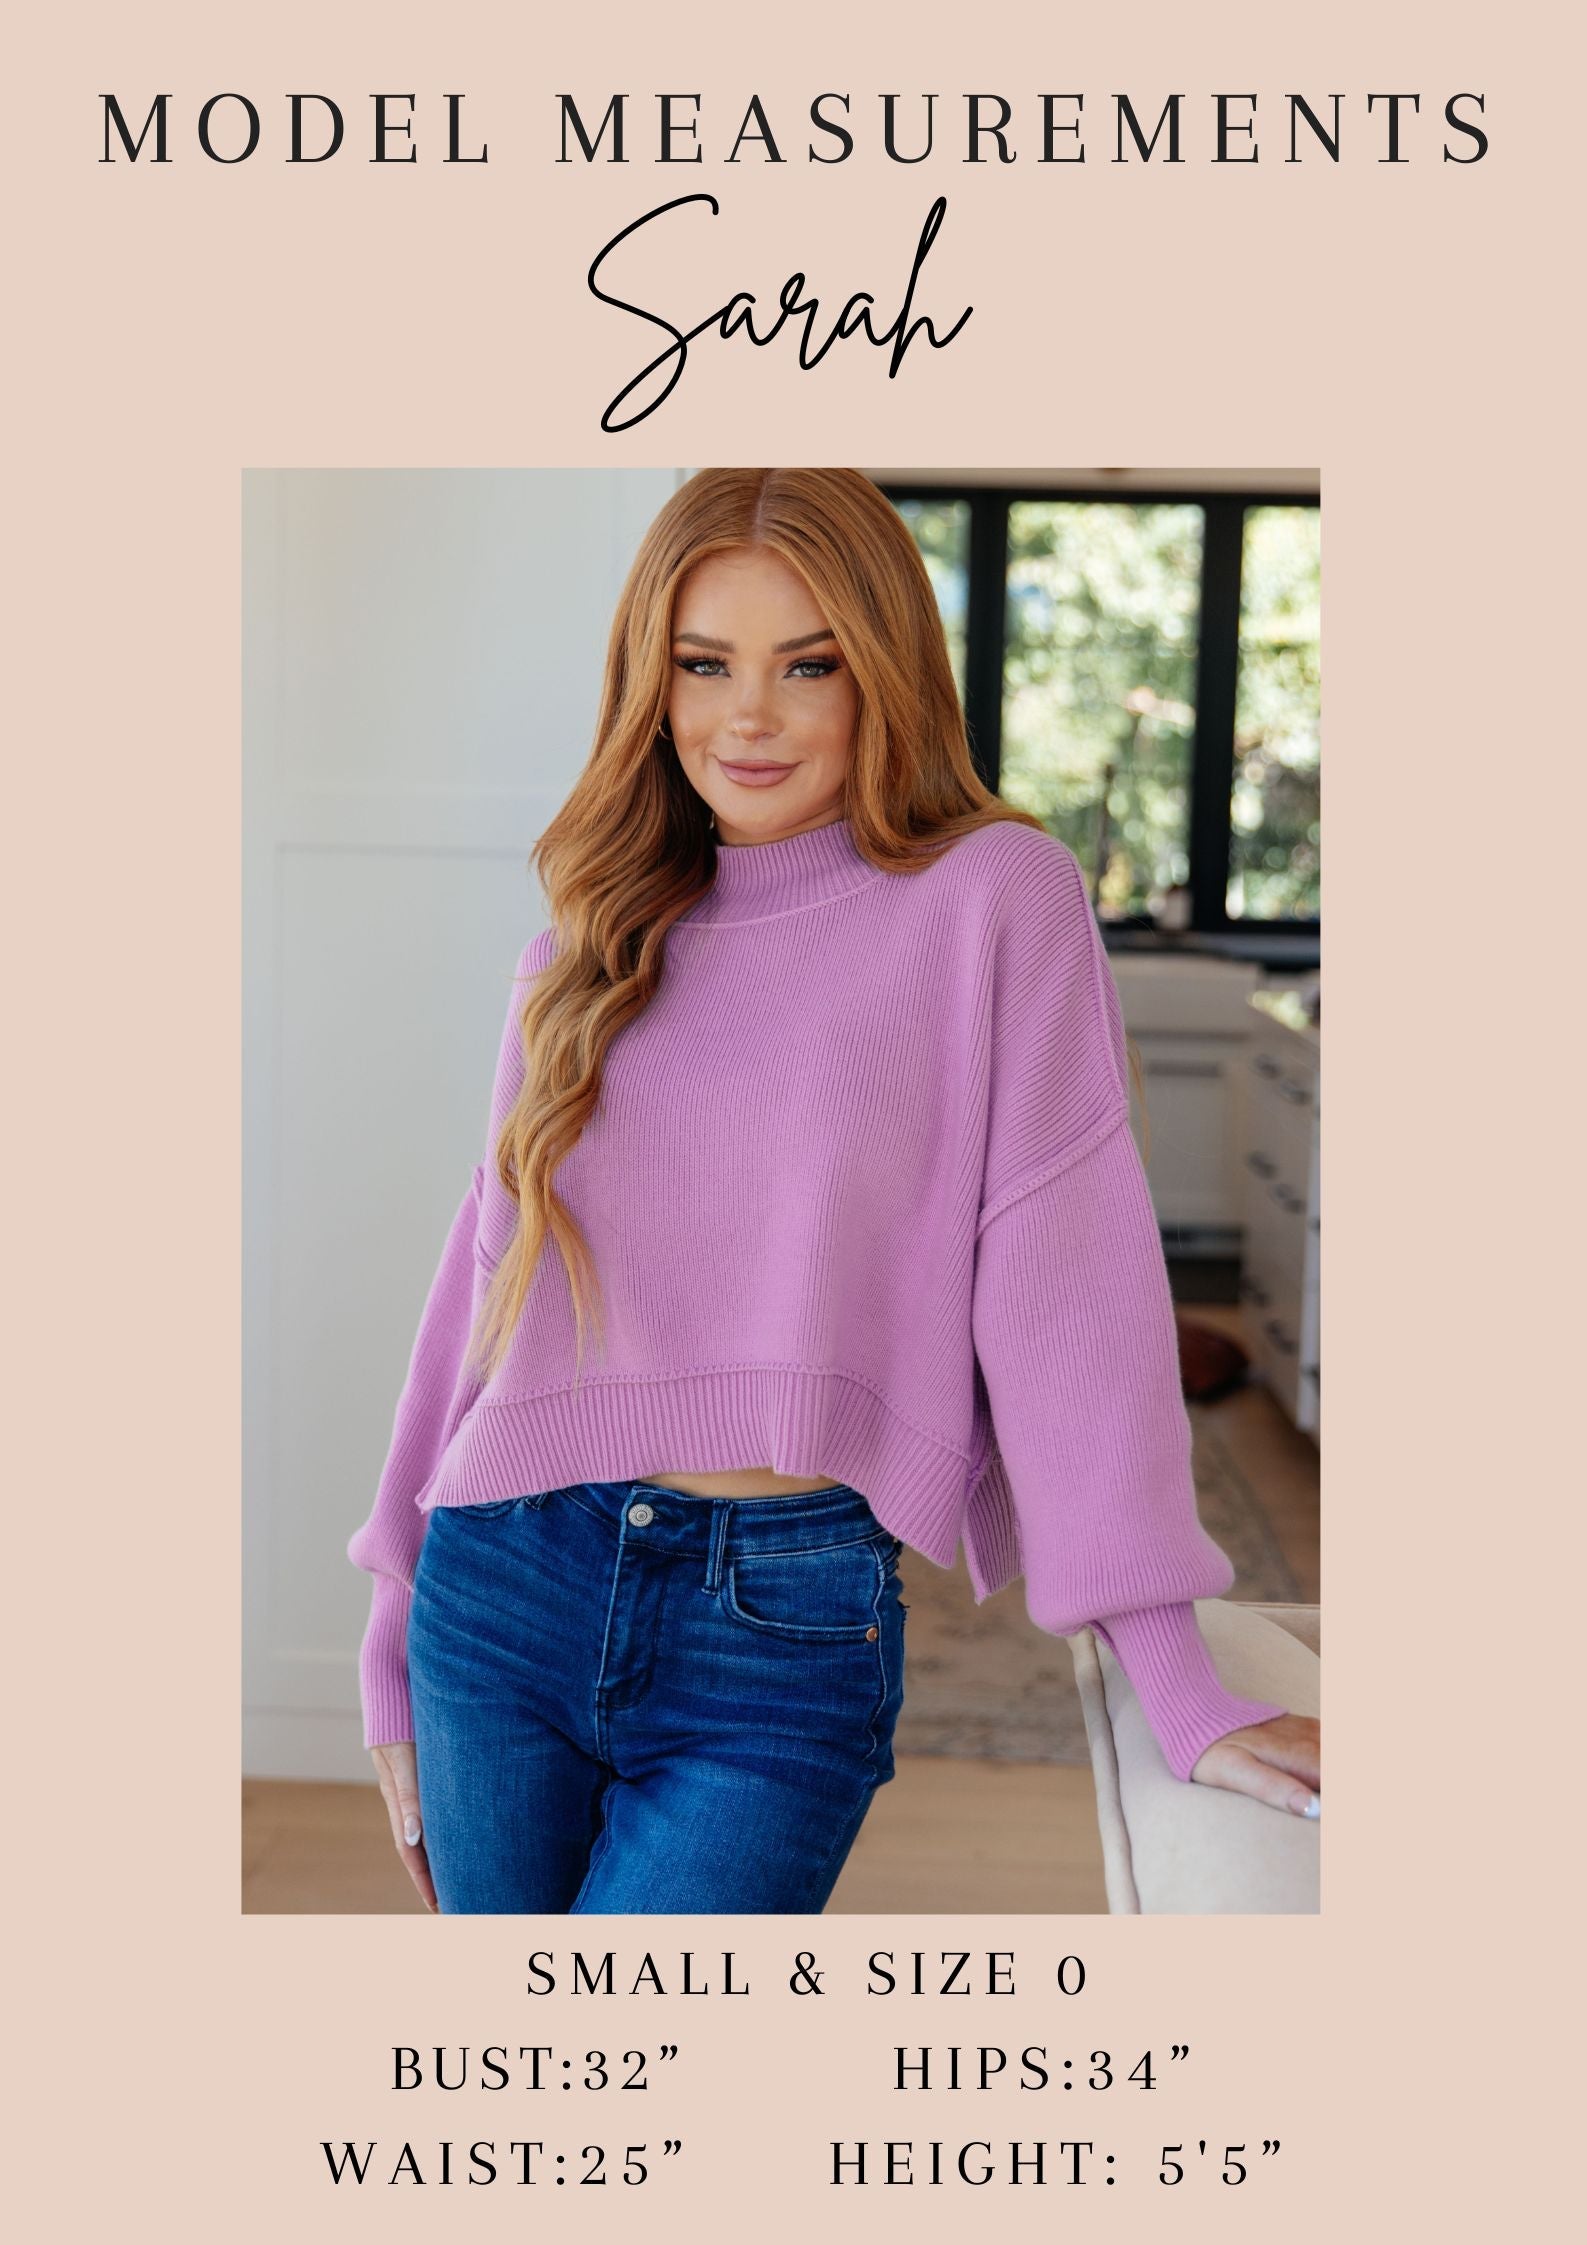 More or Less Striped Sweater - Lola Cerina Boutique